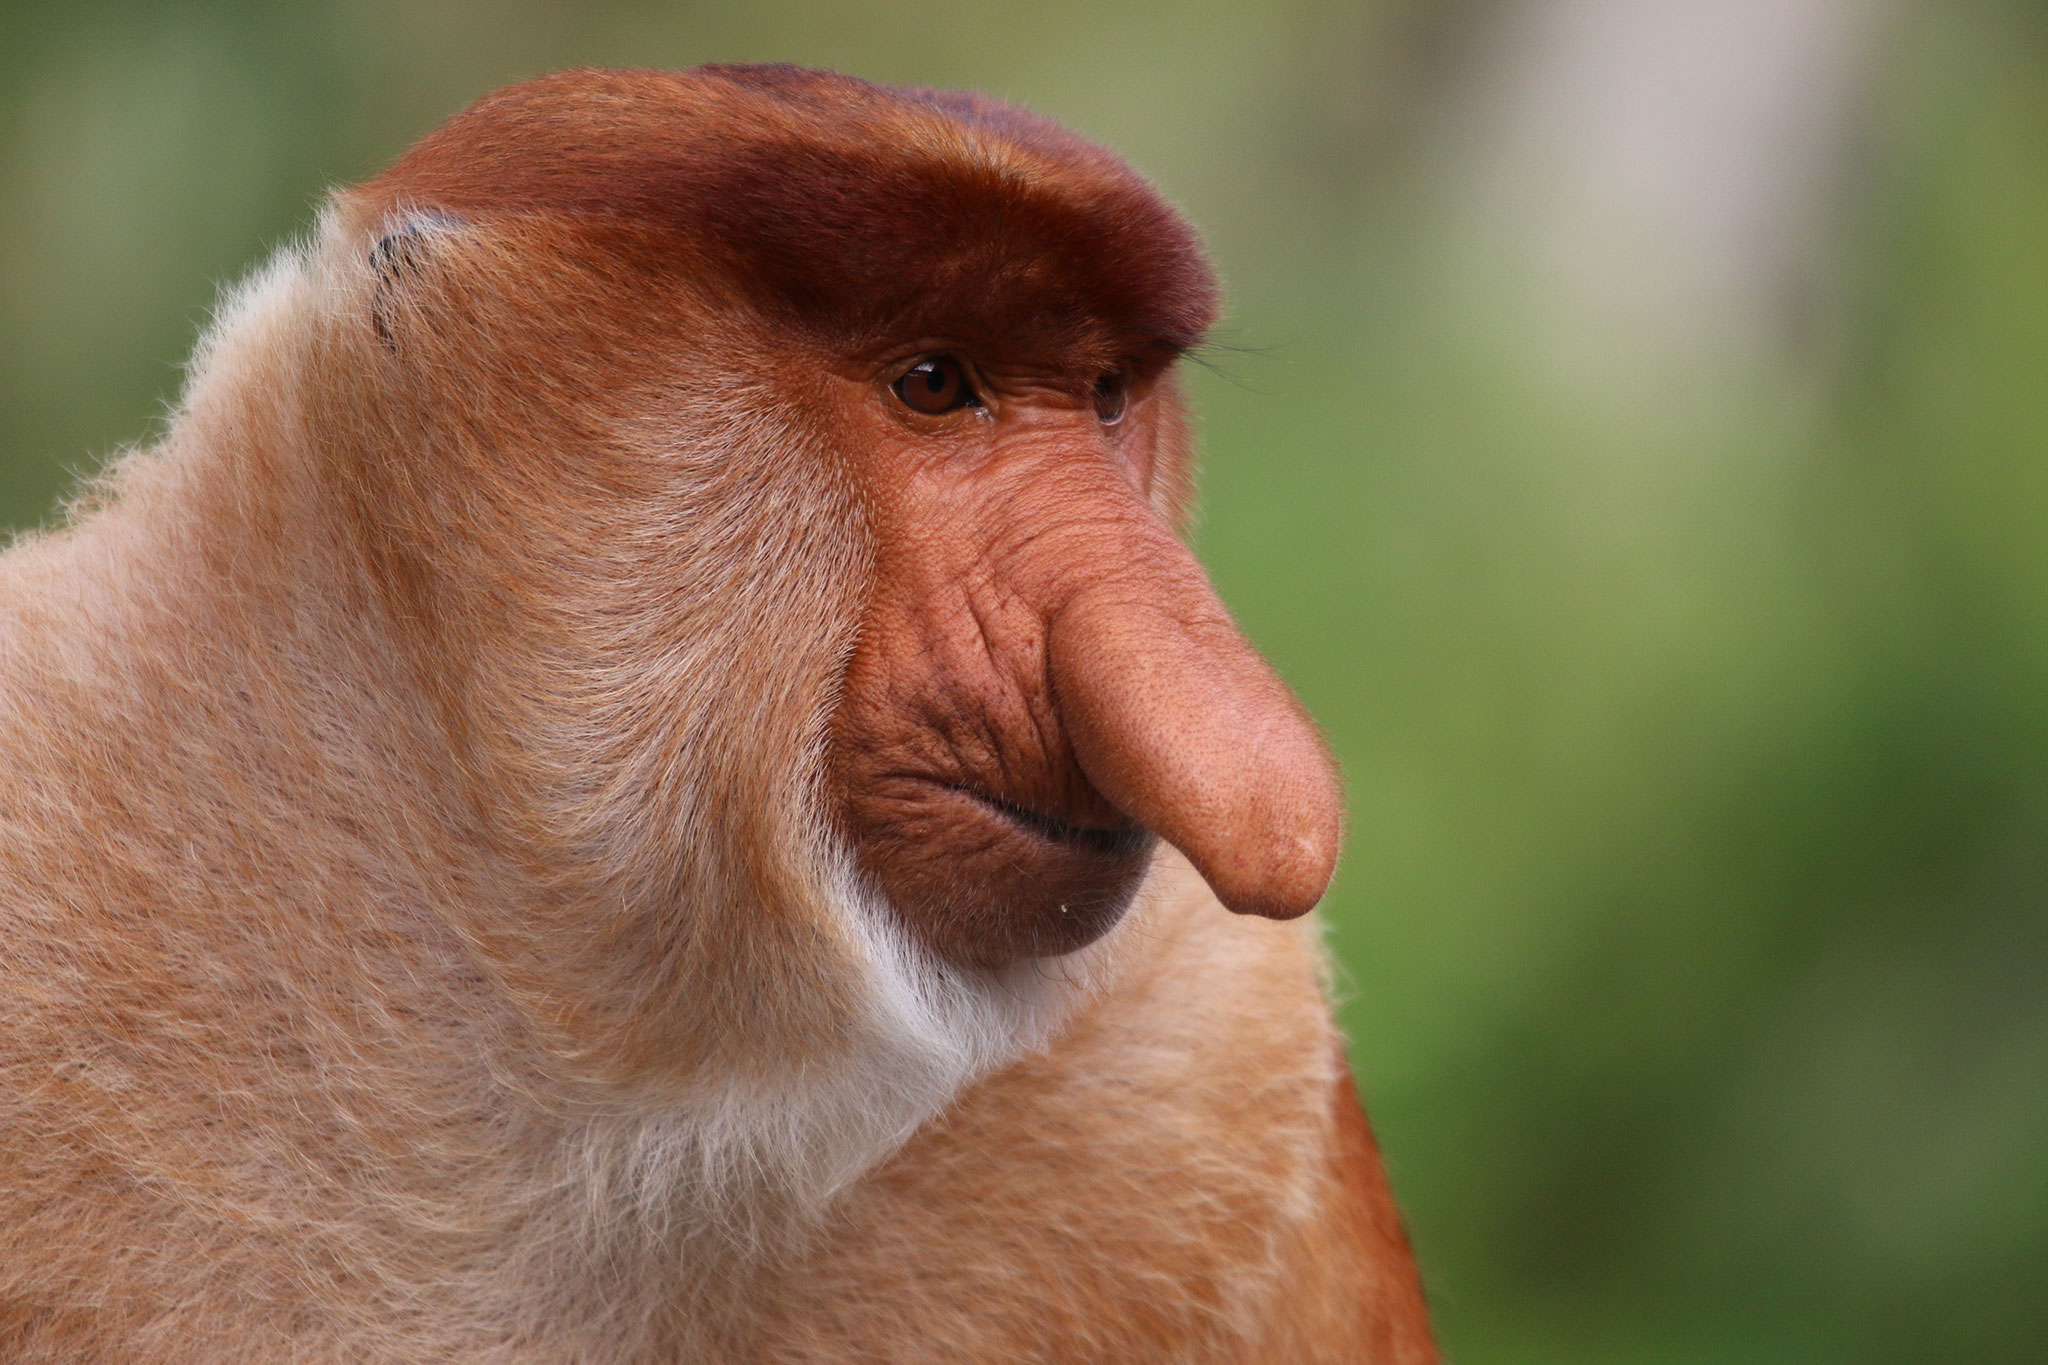 Male Proboscis Monkeys With Bigger Noses Have Better Sex Lives